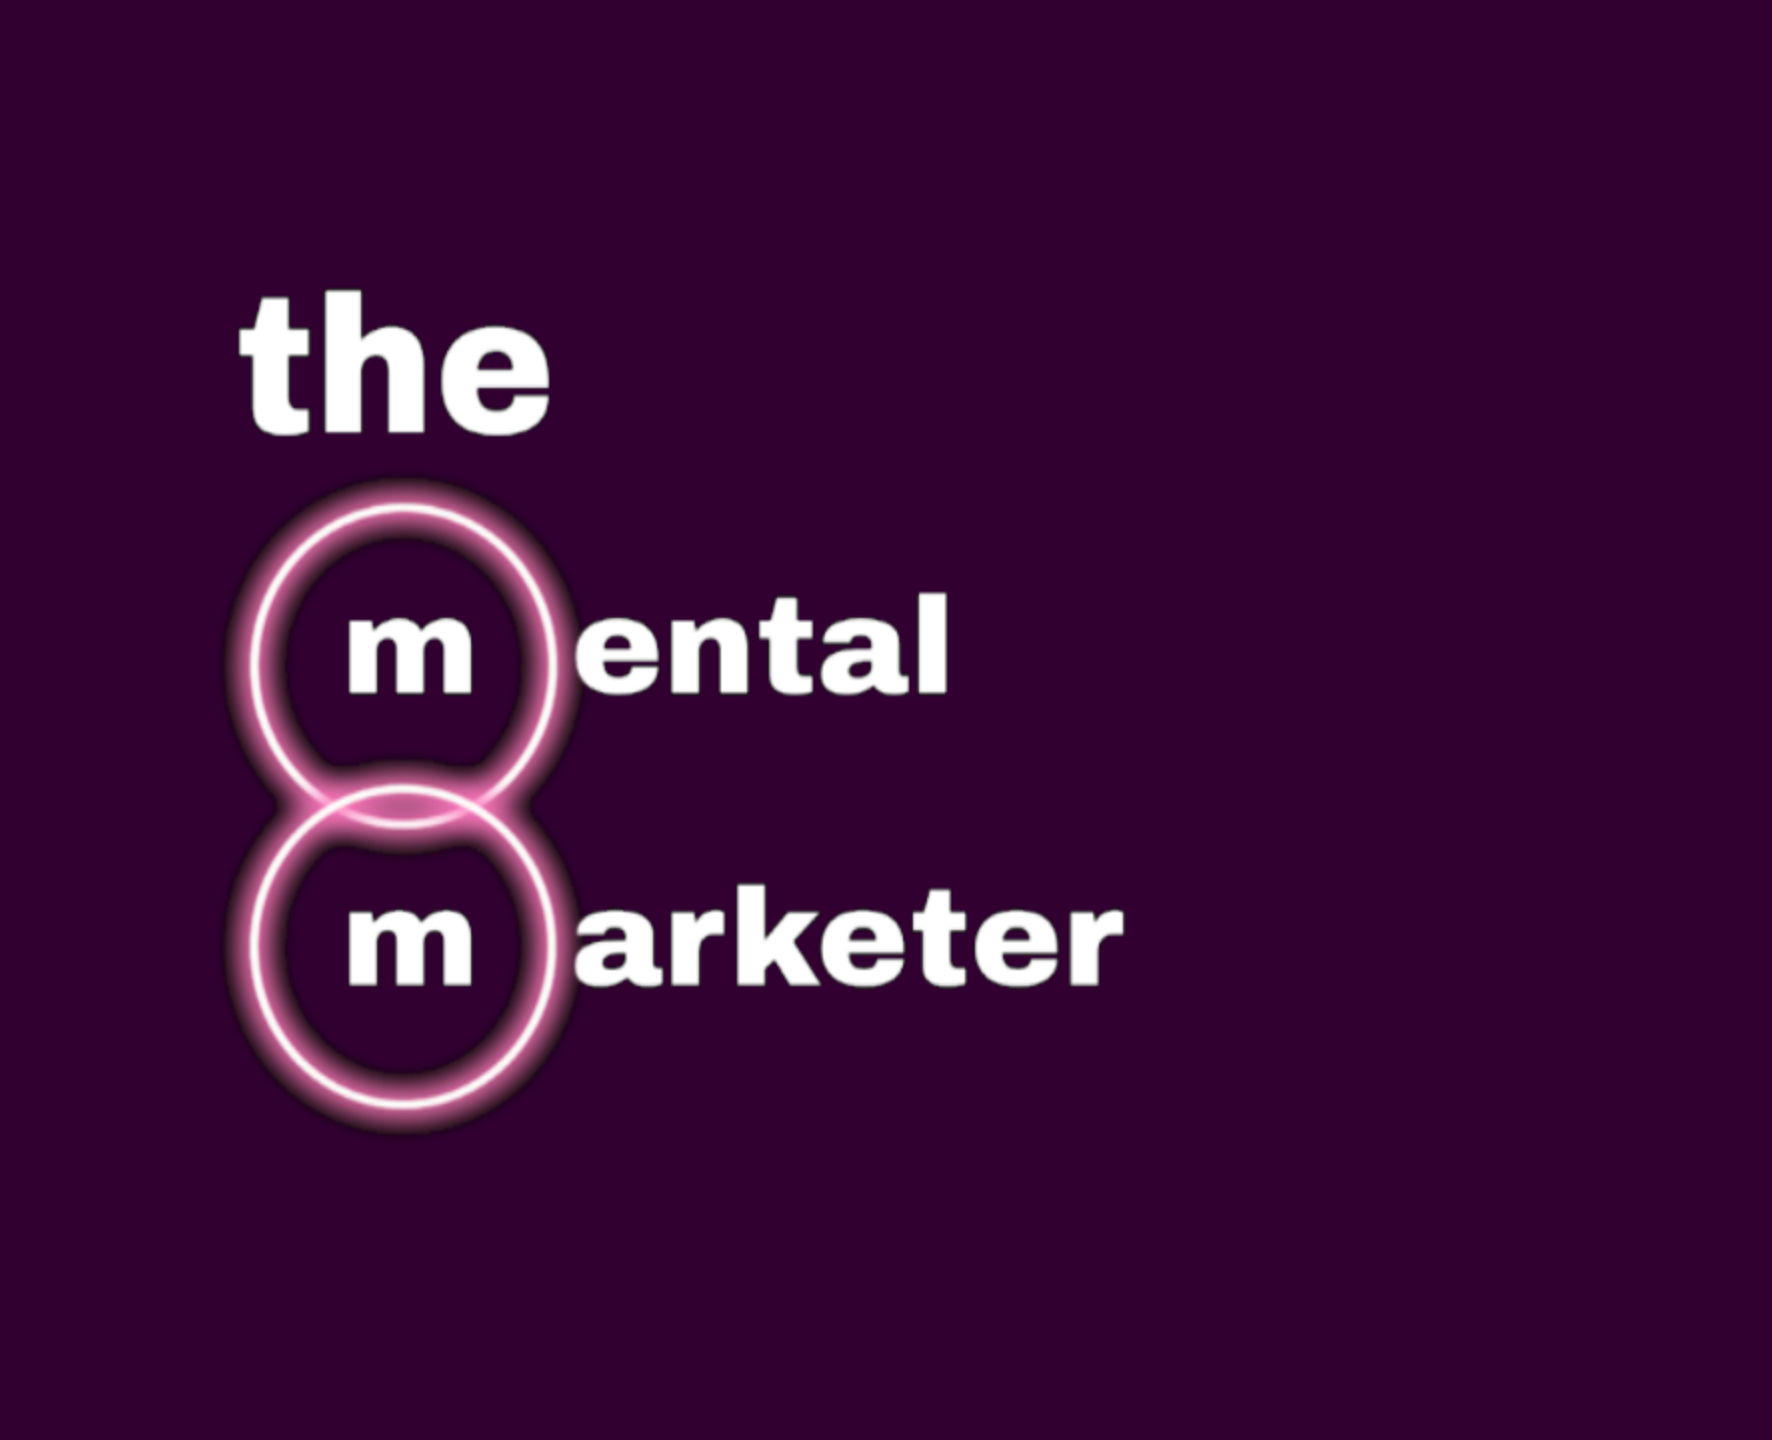 The Mental Marketer logo